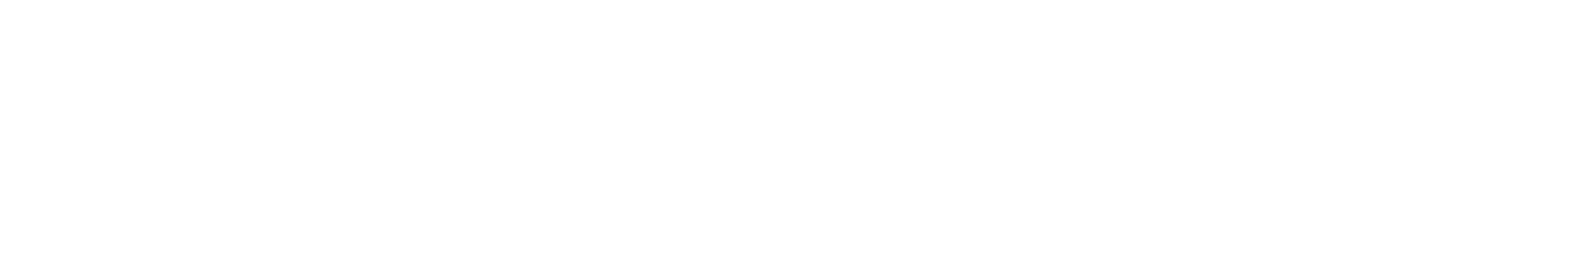 Meiko Electronics logo large for dark backgrounds (transparent PNG)